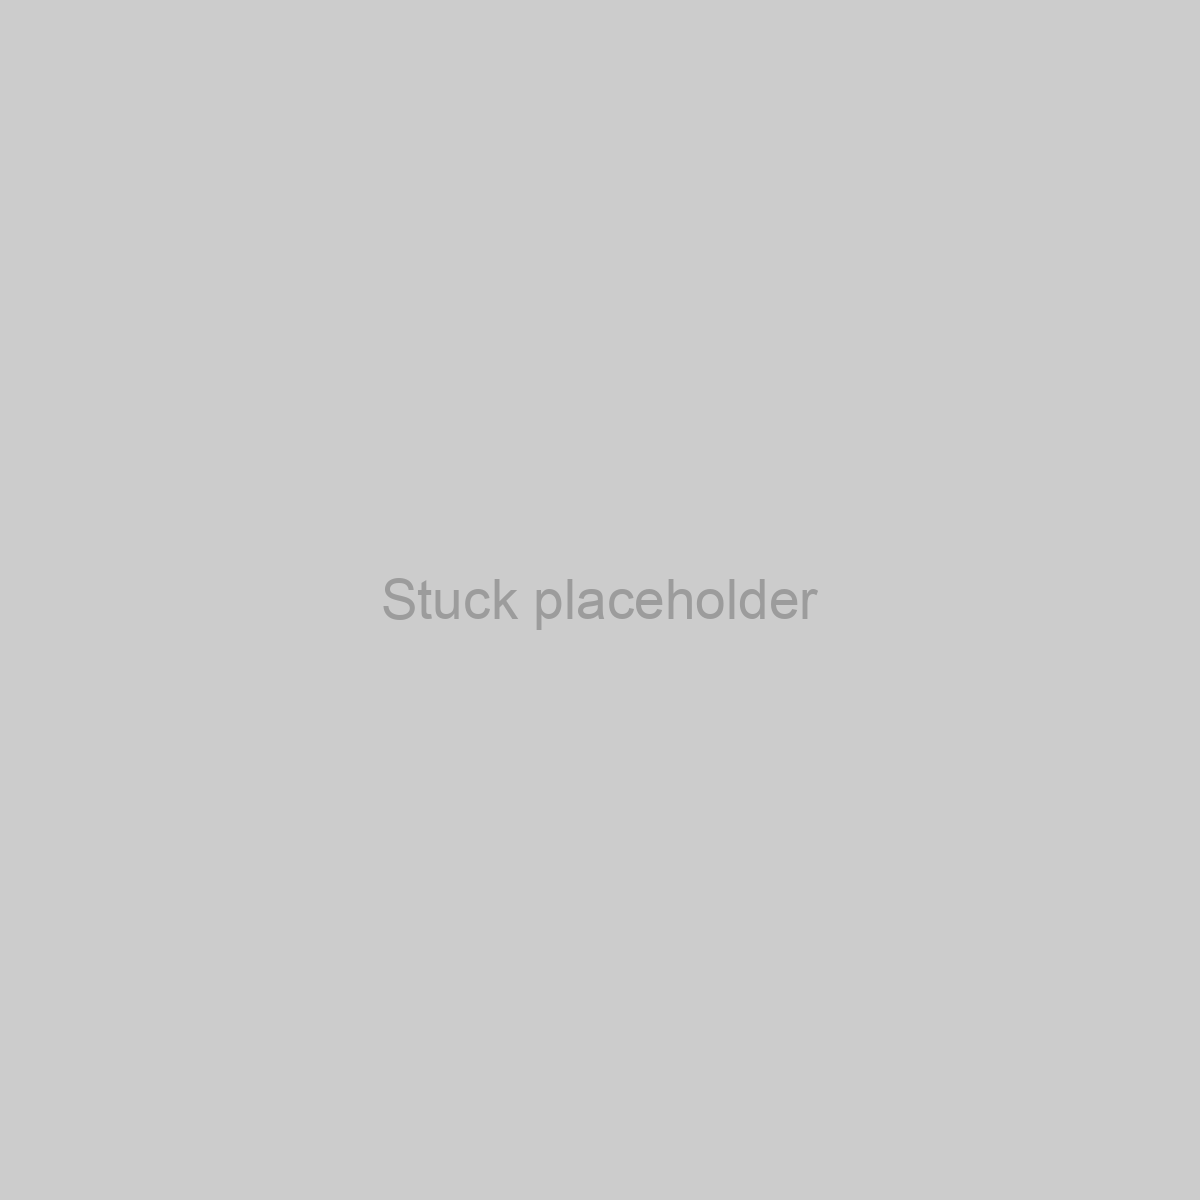 Stuck Placeholder Image